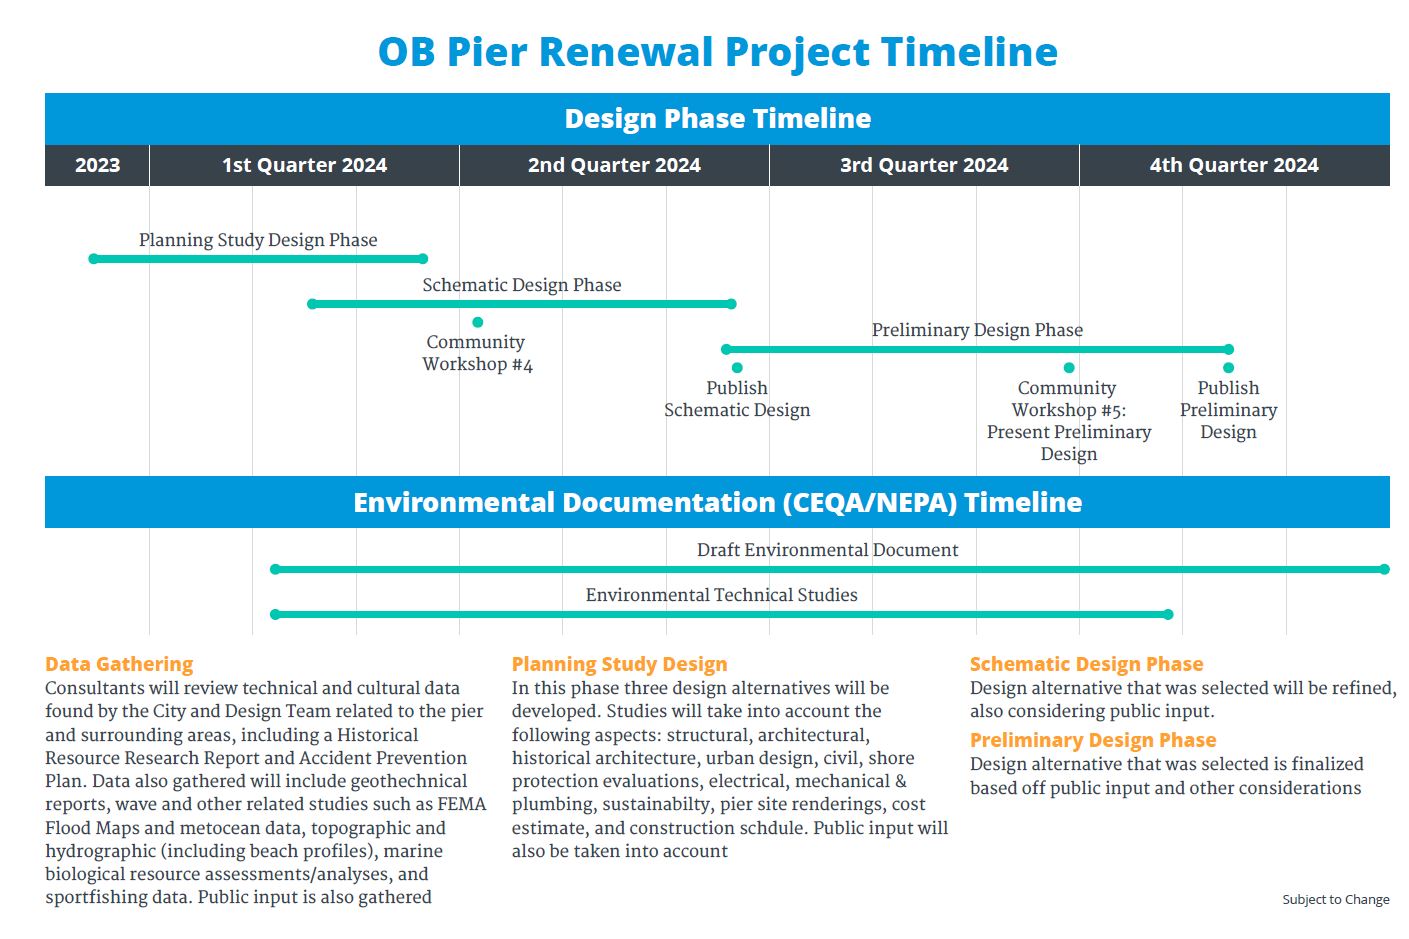 Timeline for Ocean Beach Pier Renewal project